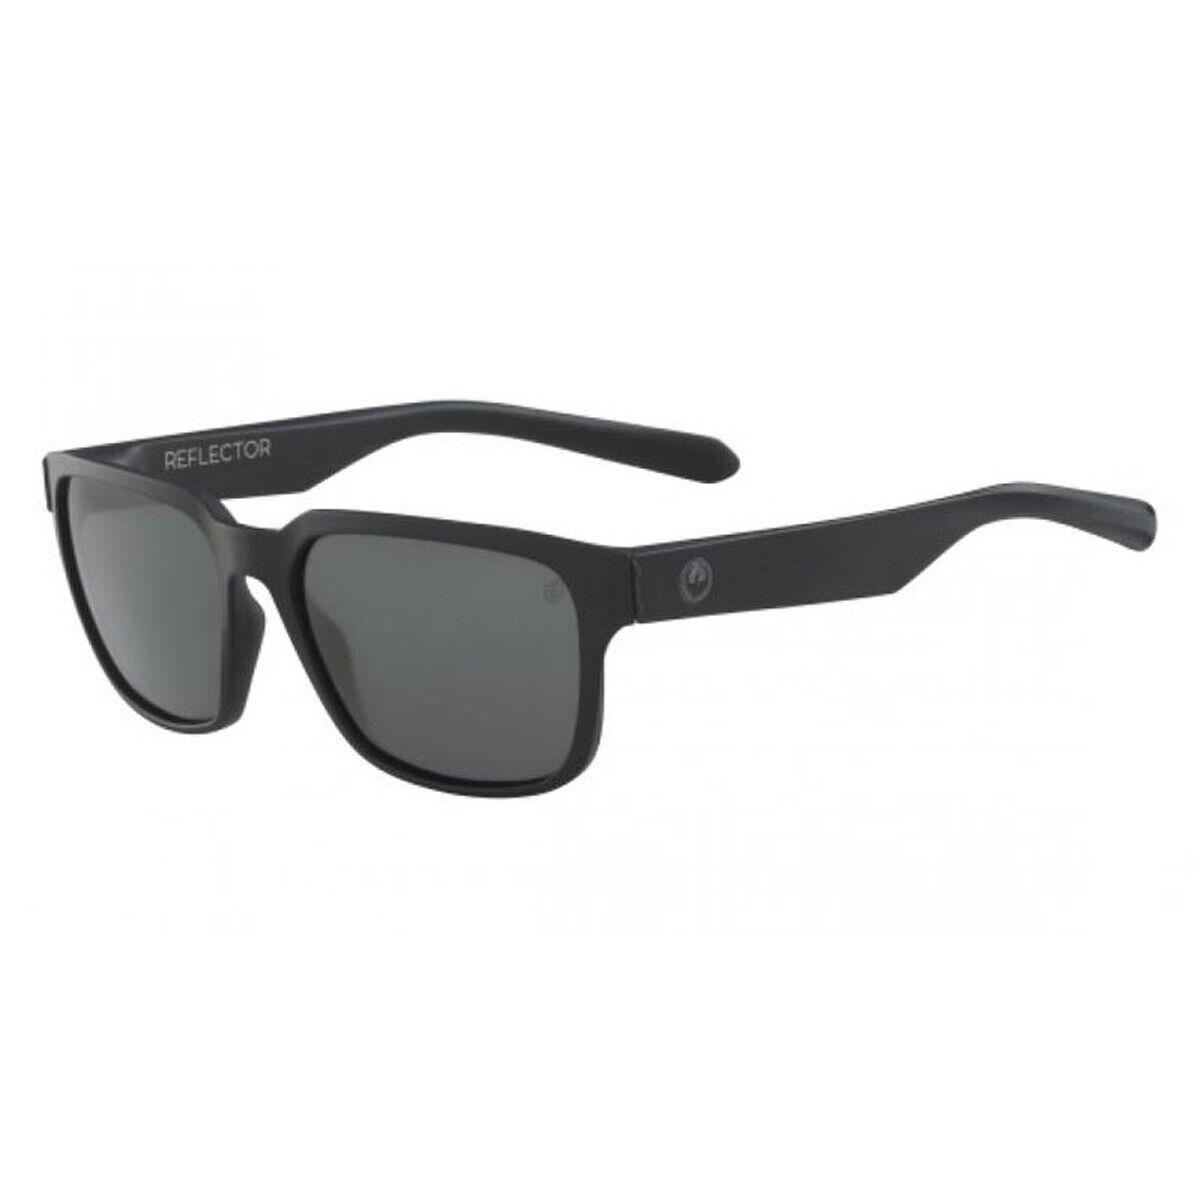 Dragon Reflector Sunglasses - Matte Black - Smoke Polarized